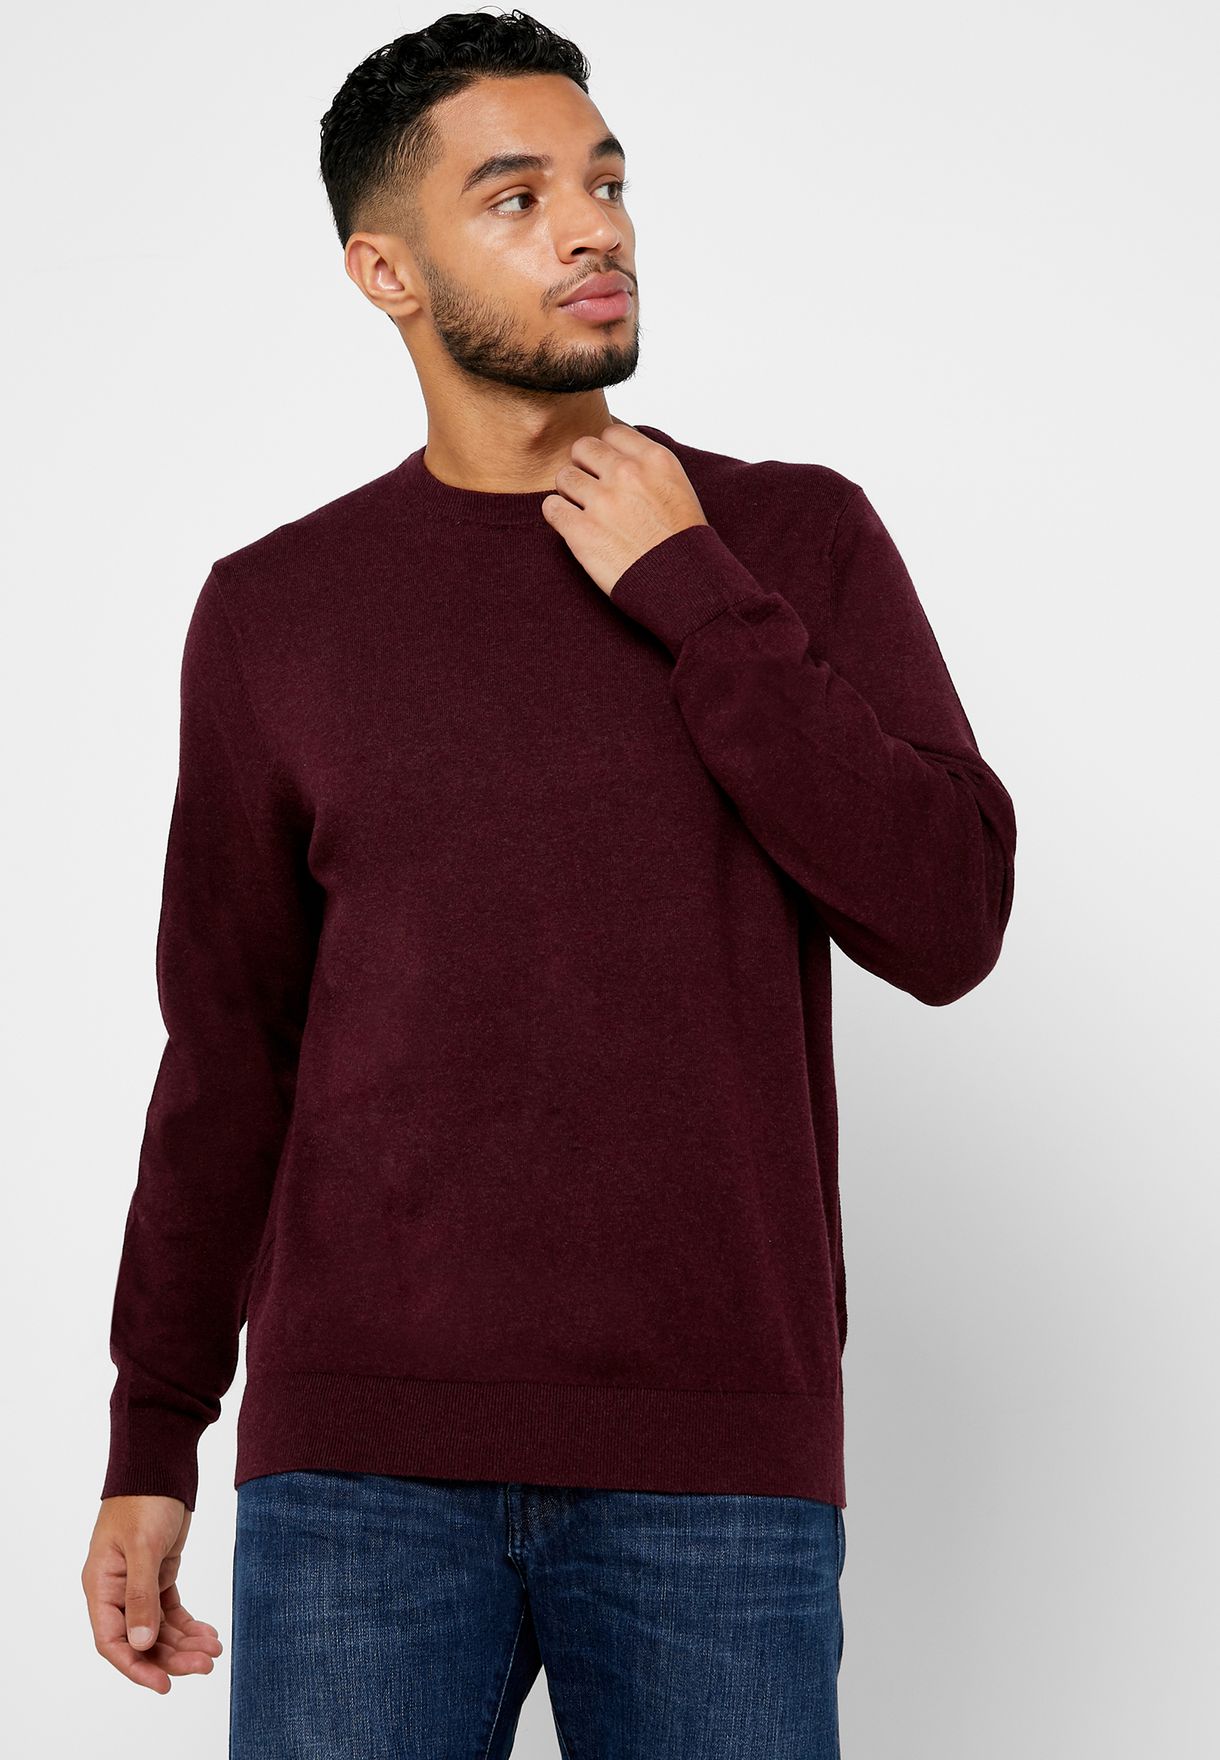 men's burgundy crew neck sweater